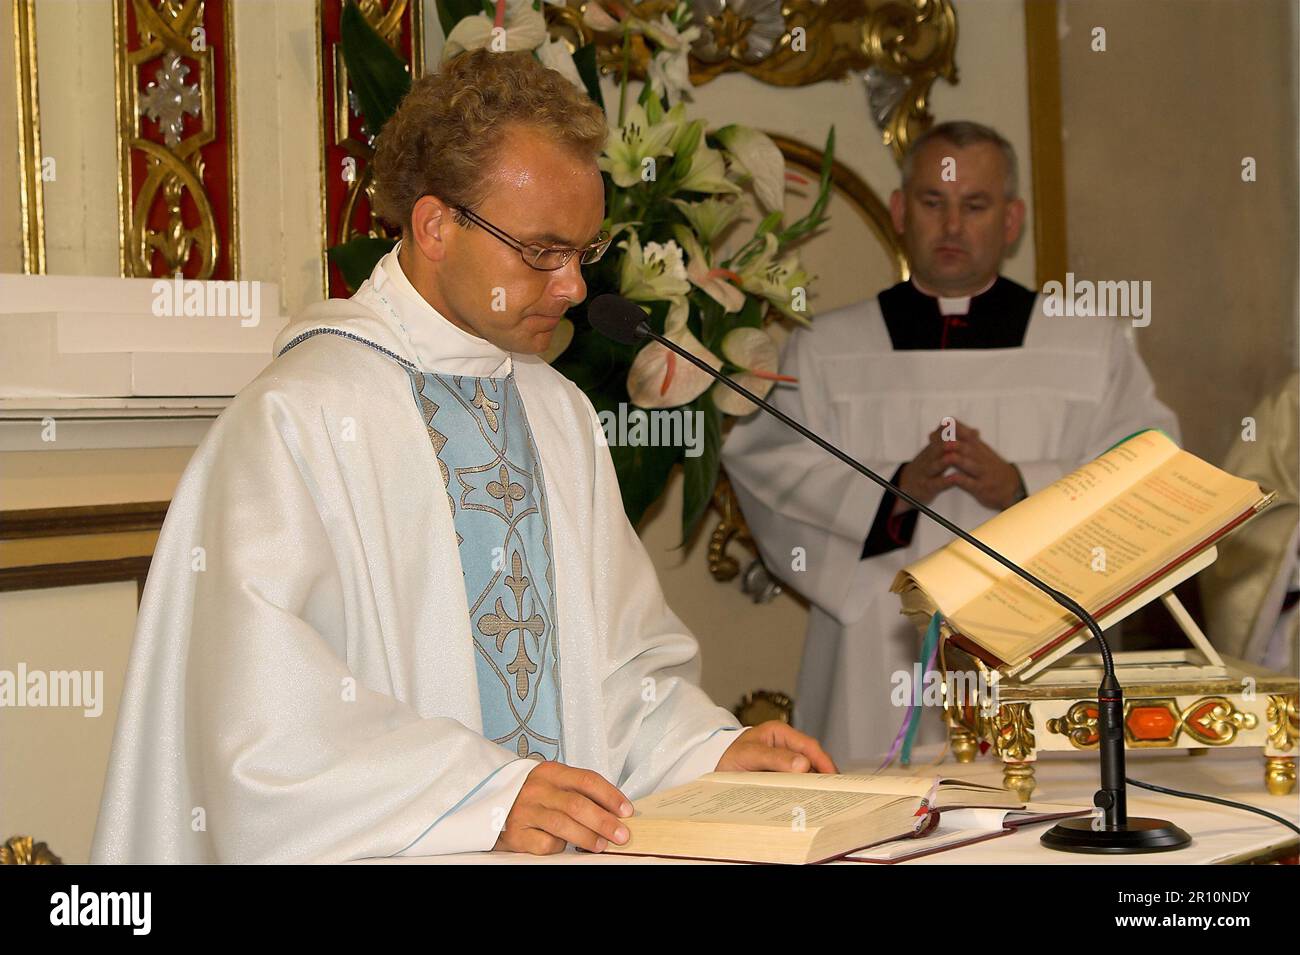 Poland, Polen, Polska; a catholic priest in a chasuble celebrates the holy mass; Ein katholischer Priester in einer Kasel feiert die heilige Messe Stock Photo